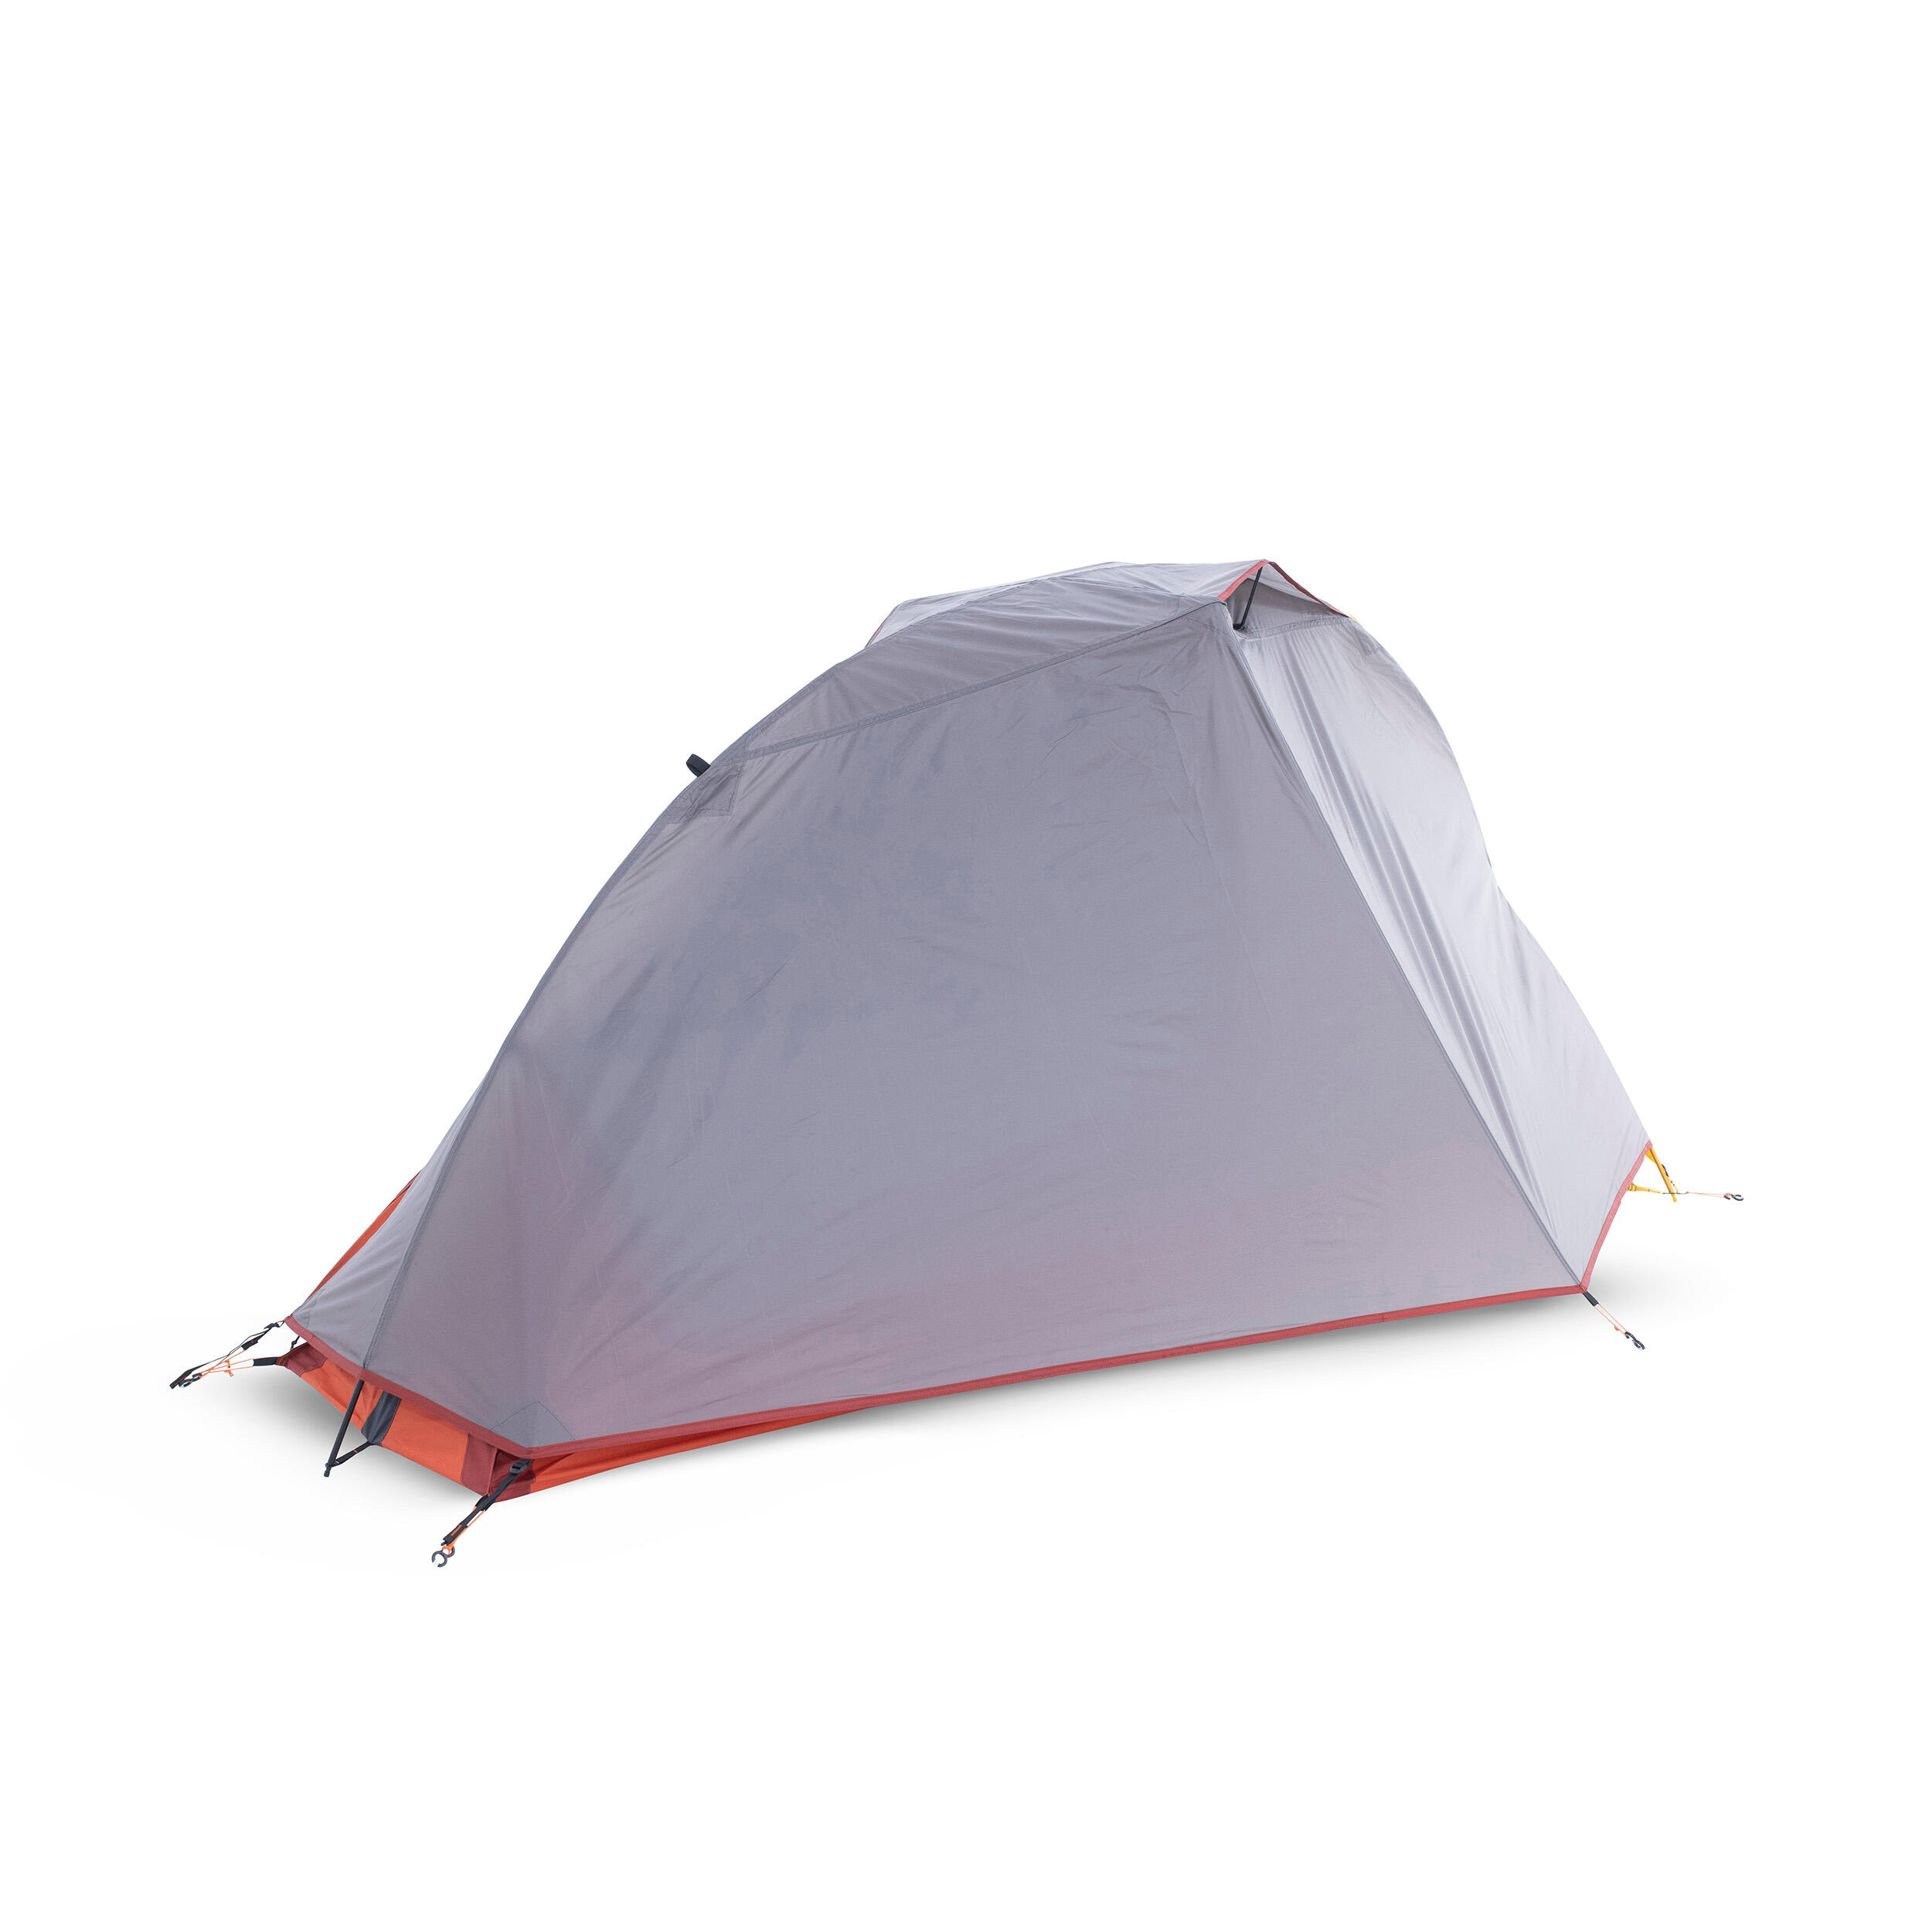 Trekking dome tent - 1-person - MT900 11/16